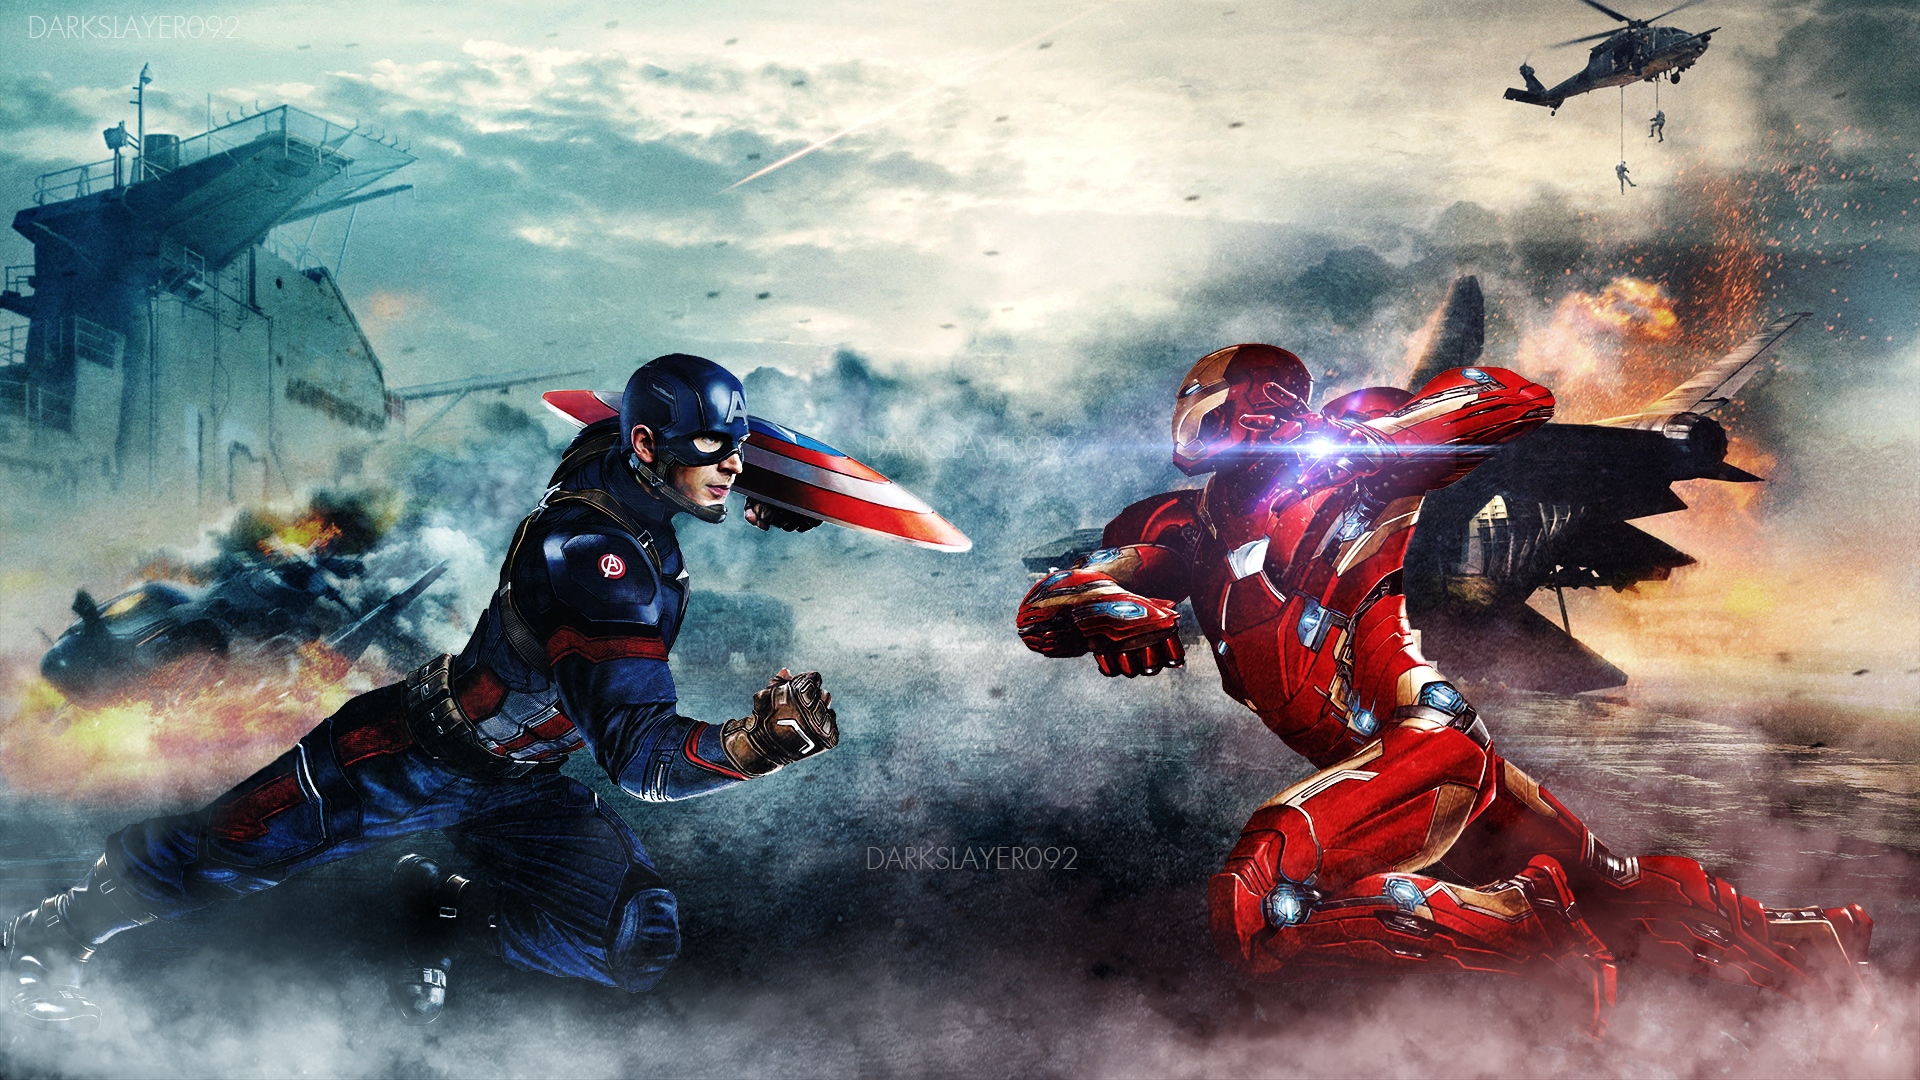 Captain America Iron Man 1920x1080